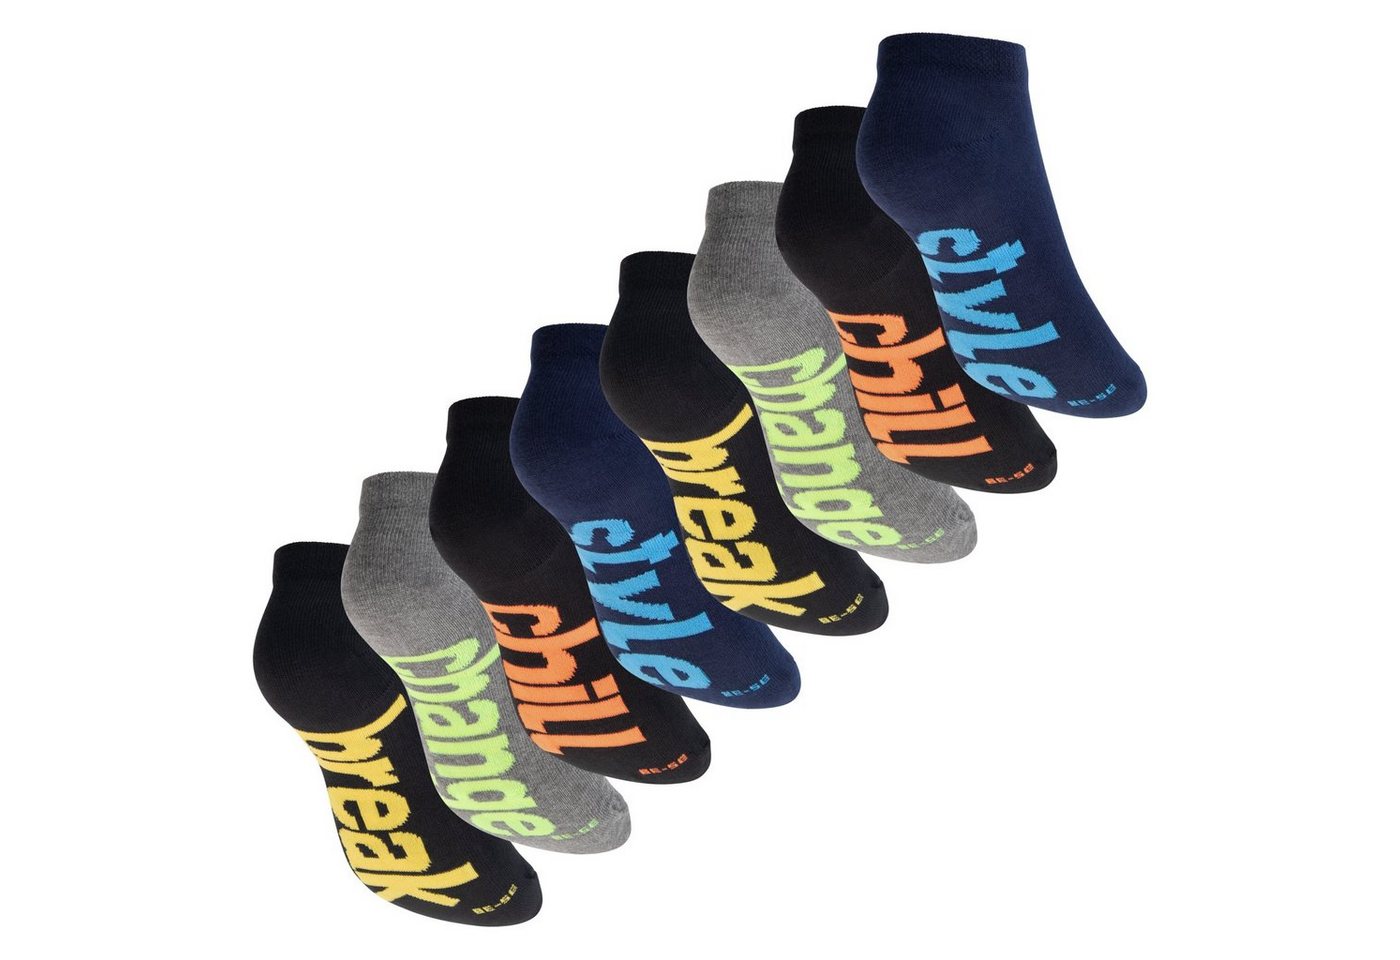 Footstar Füßlinge Damen & Herren Sneaker Socken (8 Paar) Neon Sportsocken von Footstar